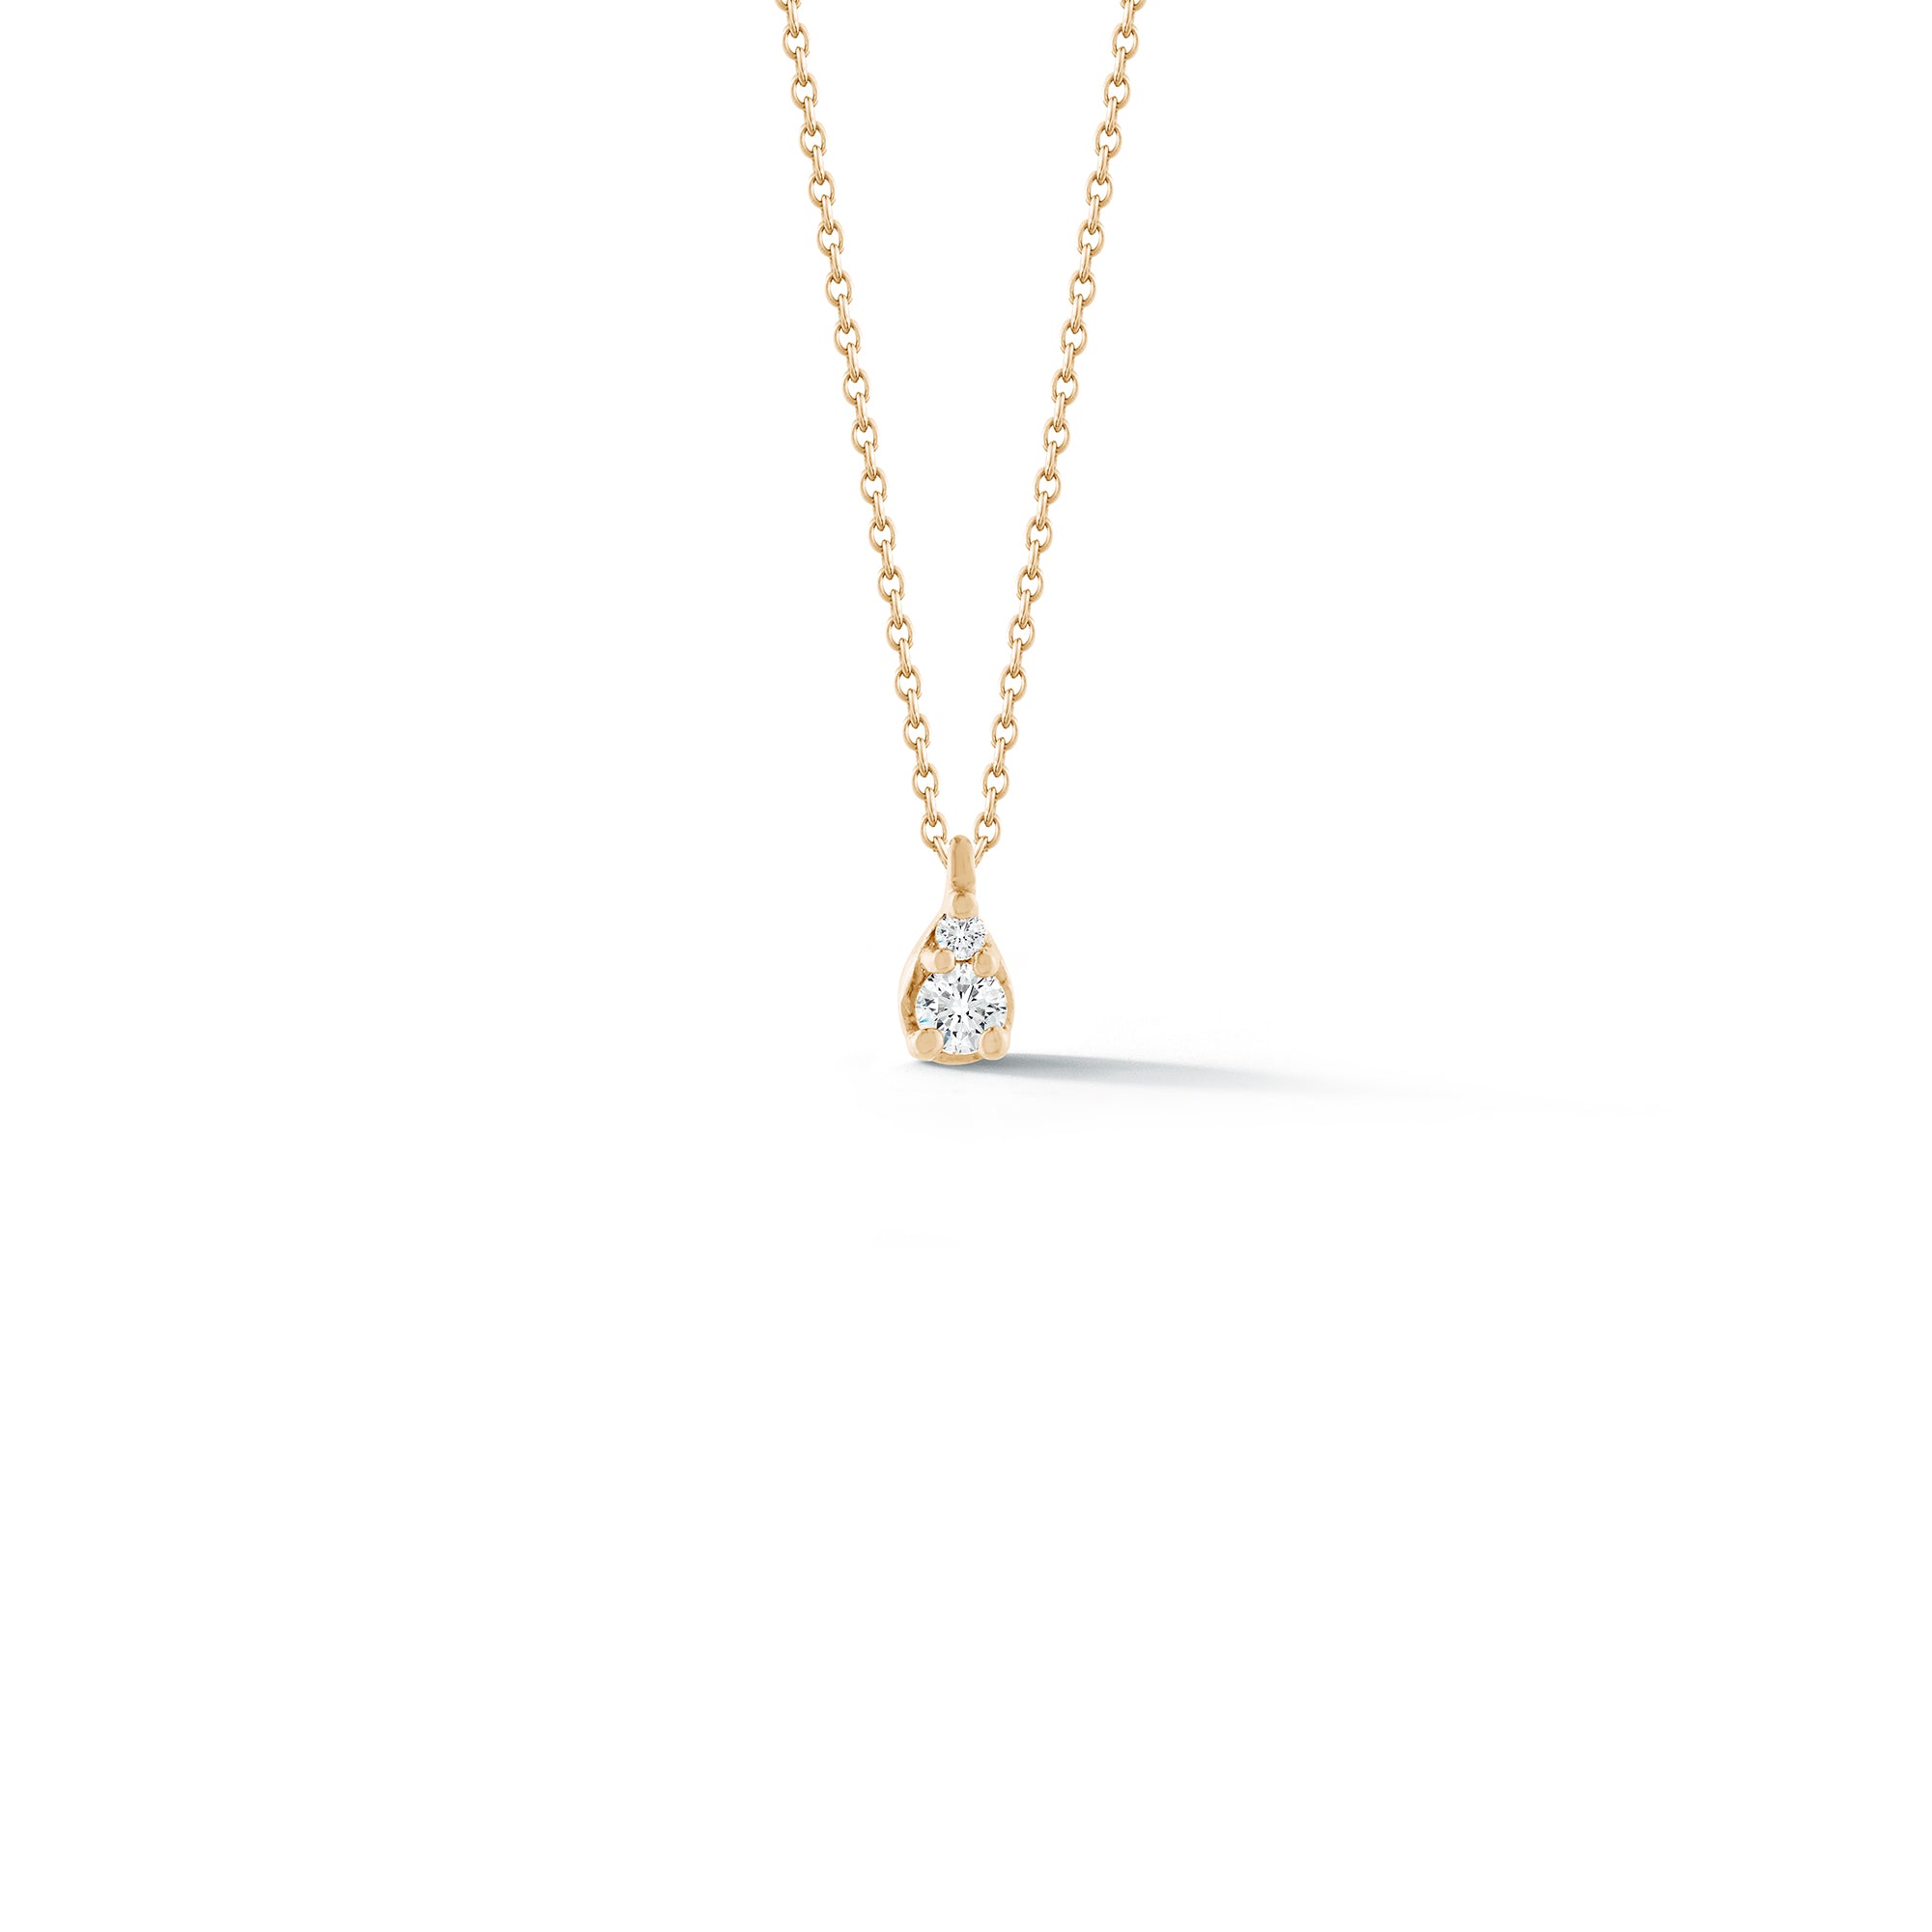 Dana Rebecca Designs Sophia Ryan 14K white gold and diamond charm necklace